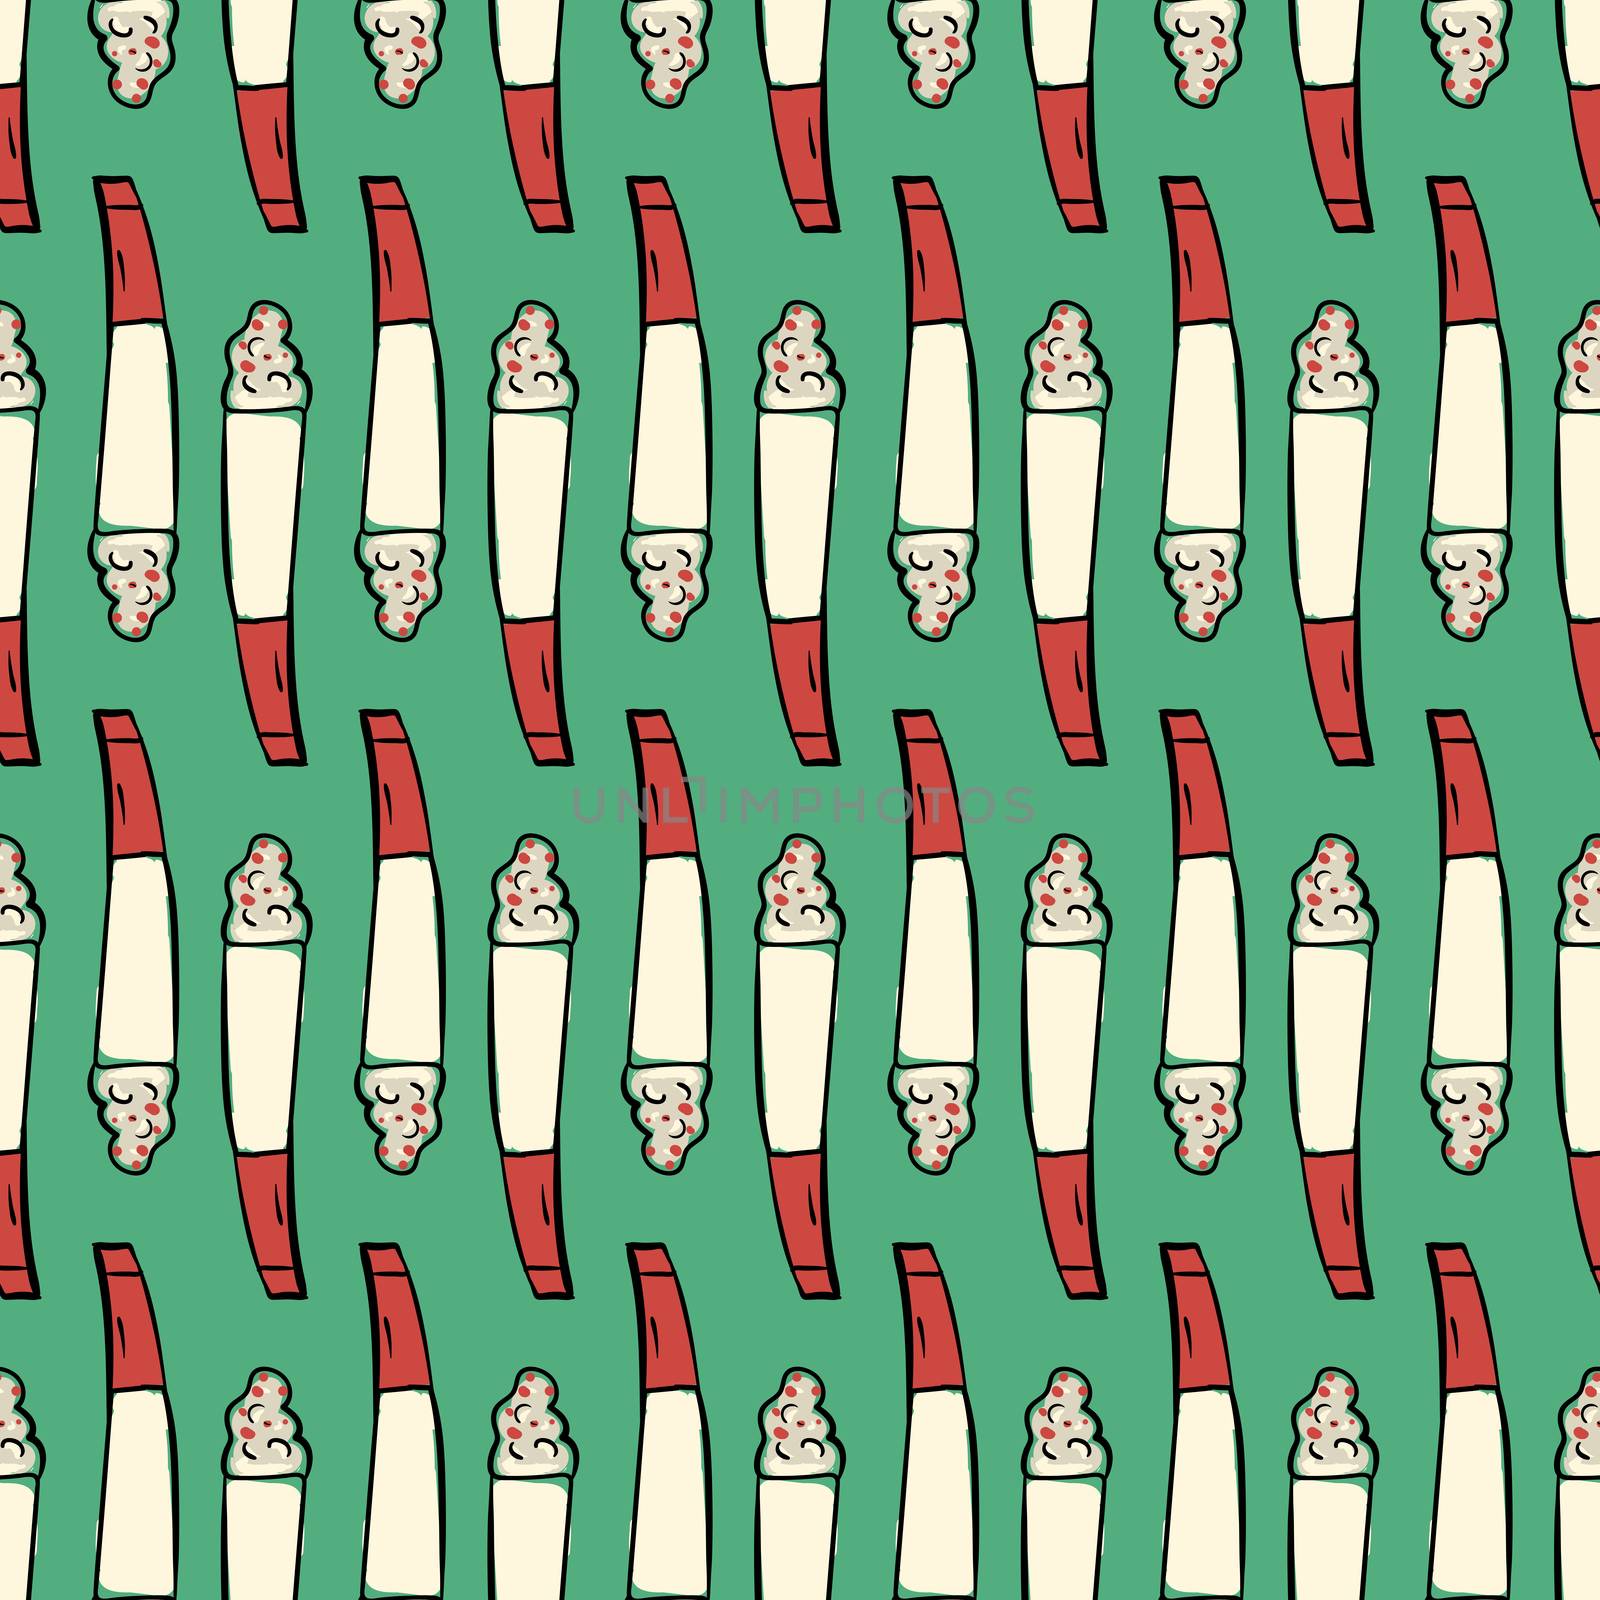 Cigarette pattern , illustration, vector on white background